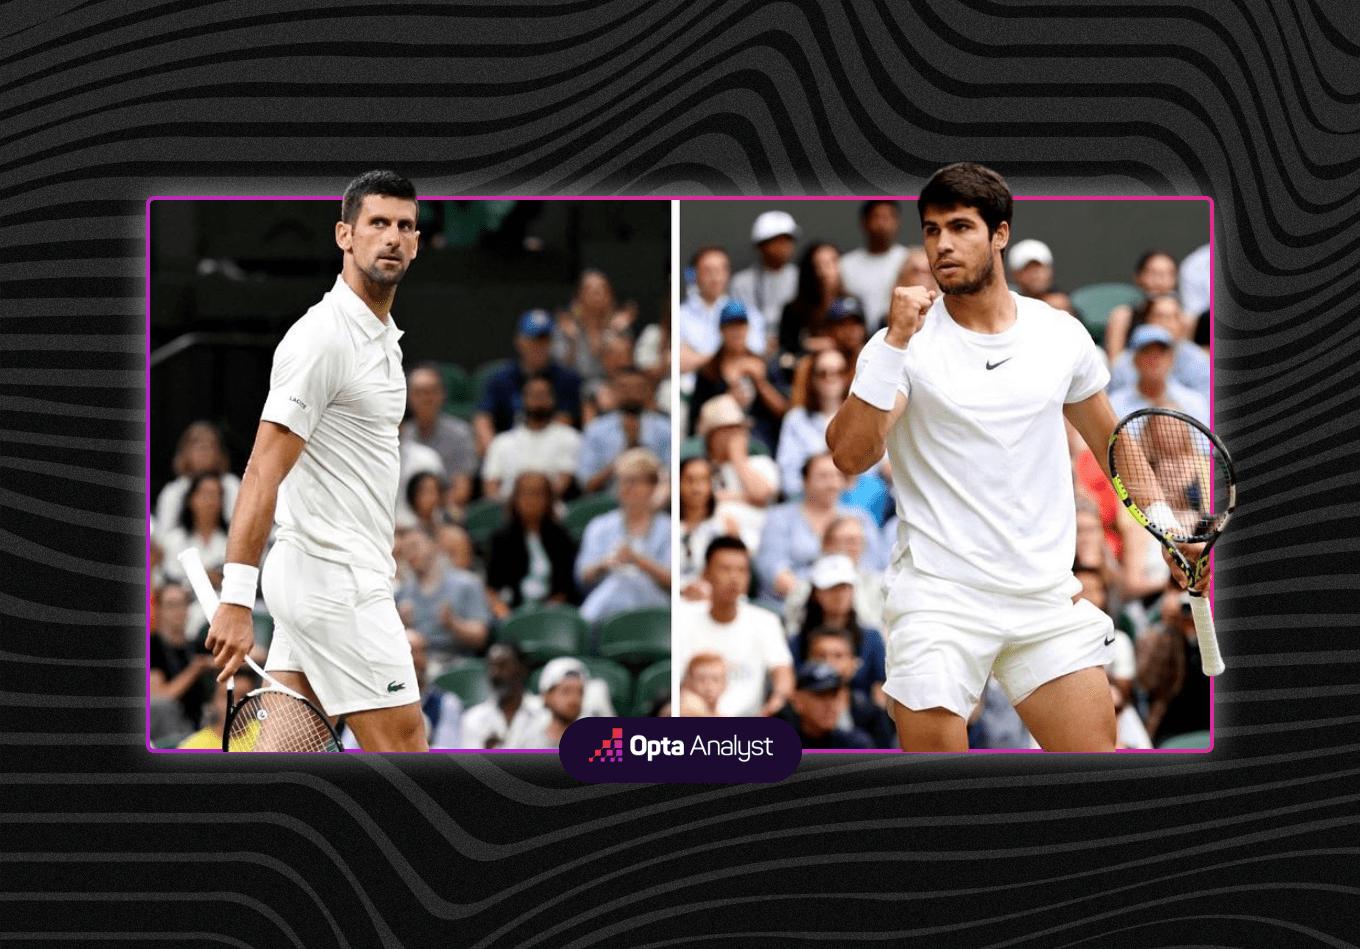 Alcaraz vs. Djokovic: Who Will Win the Wimbledon Men’s Singles Final?